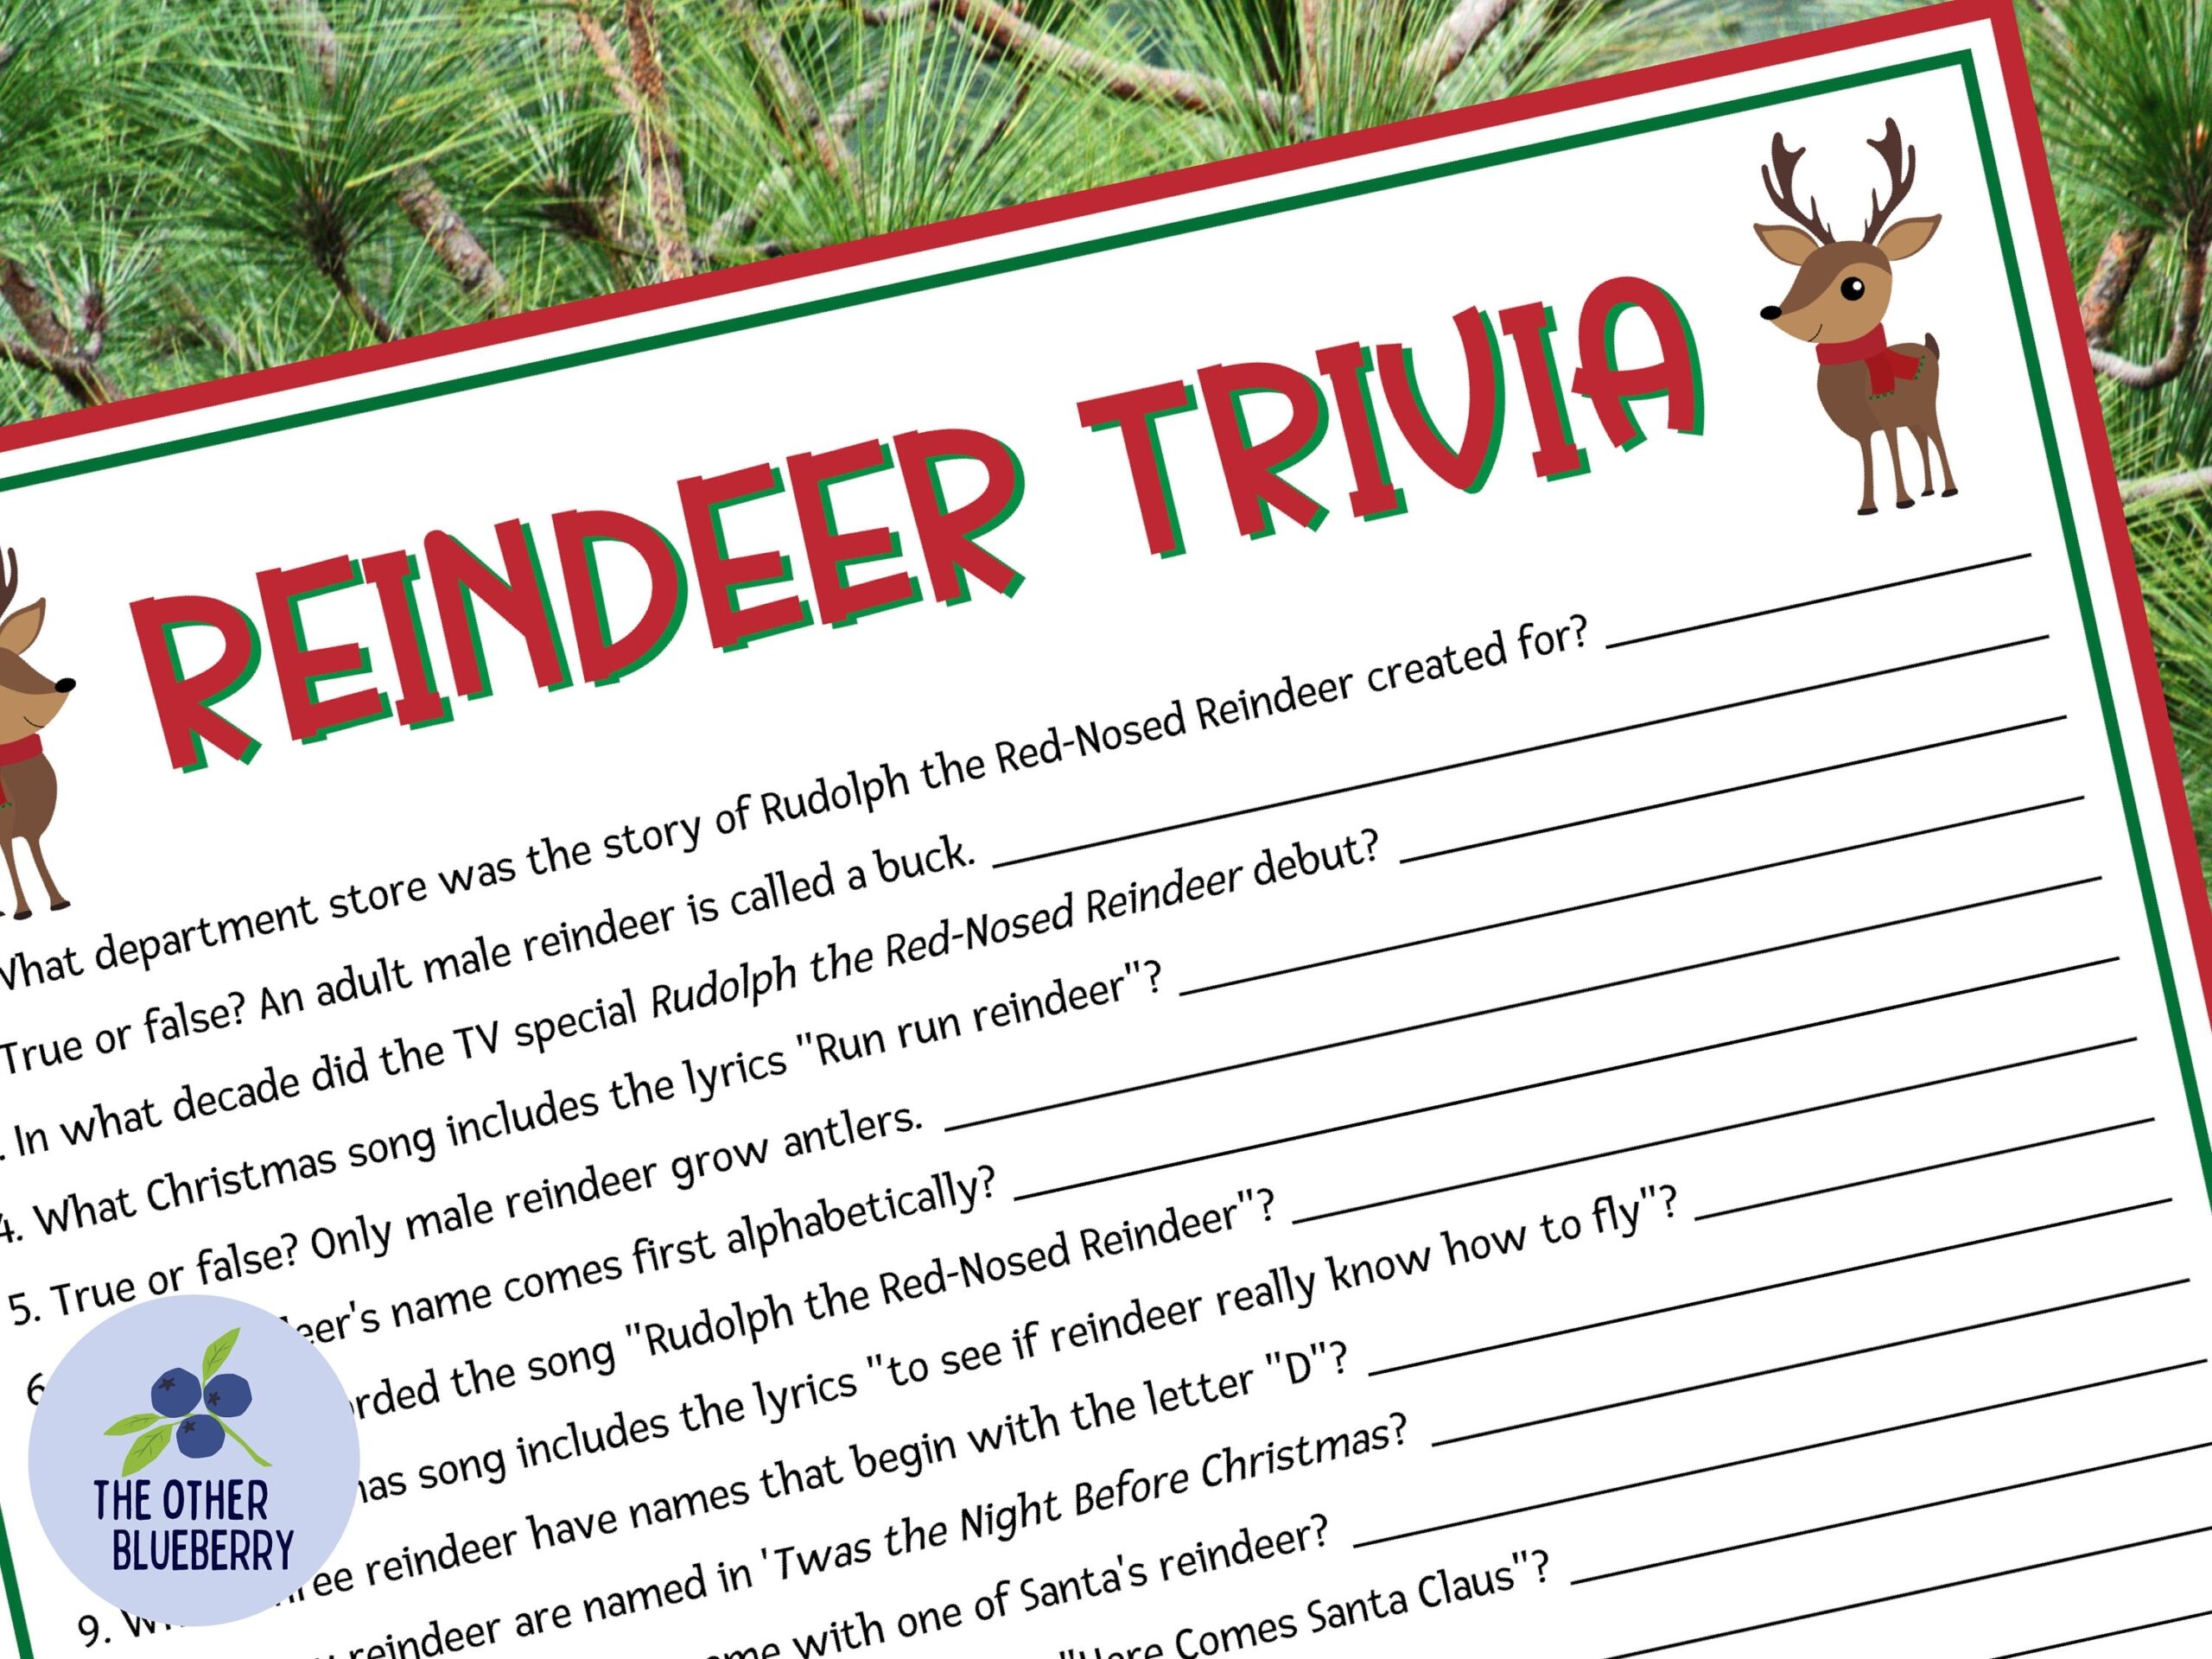 Reindeer Trivia Game Reindeer Game Christmas Game Christmas Party Game Christmas Printable Game Holiday Party Game Printable Etsy